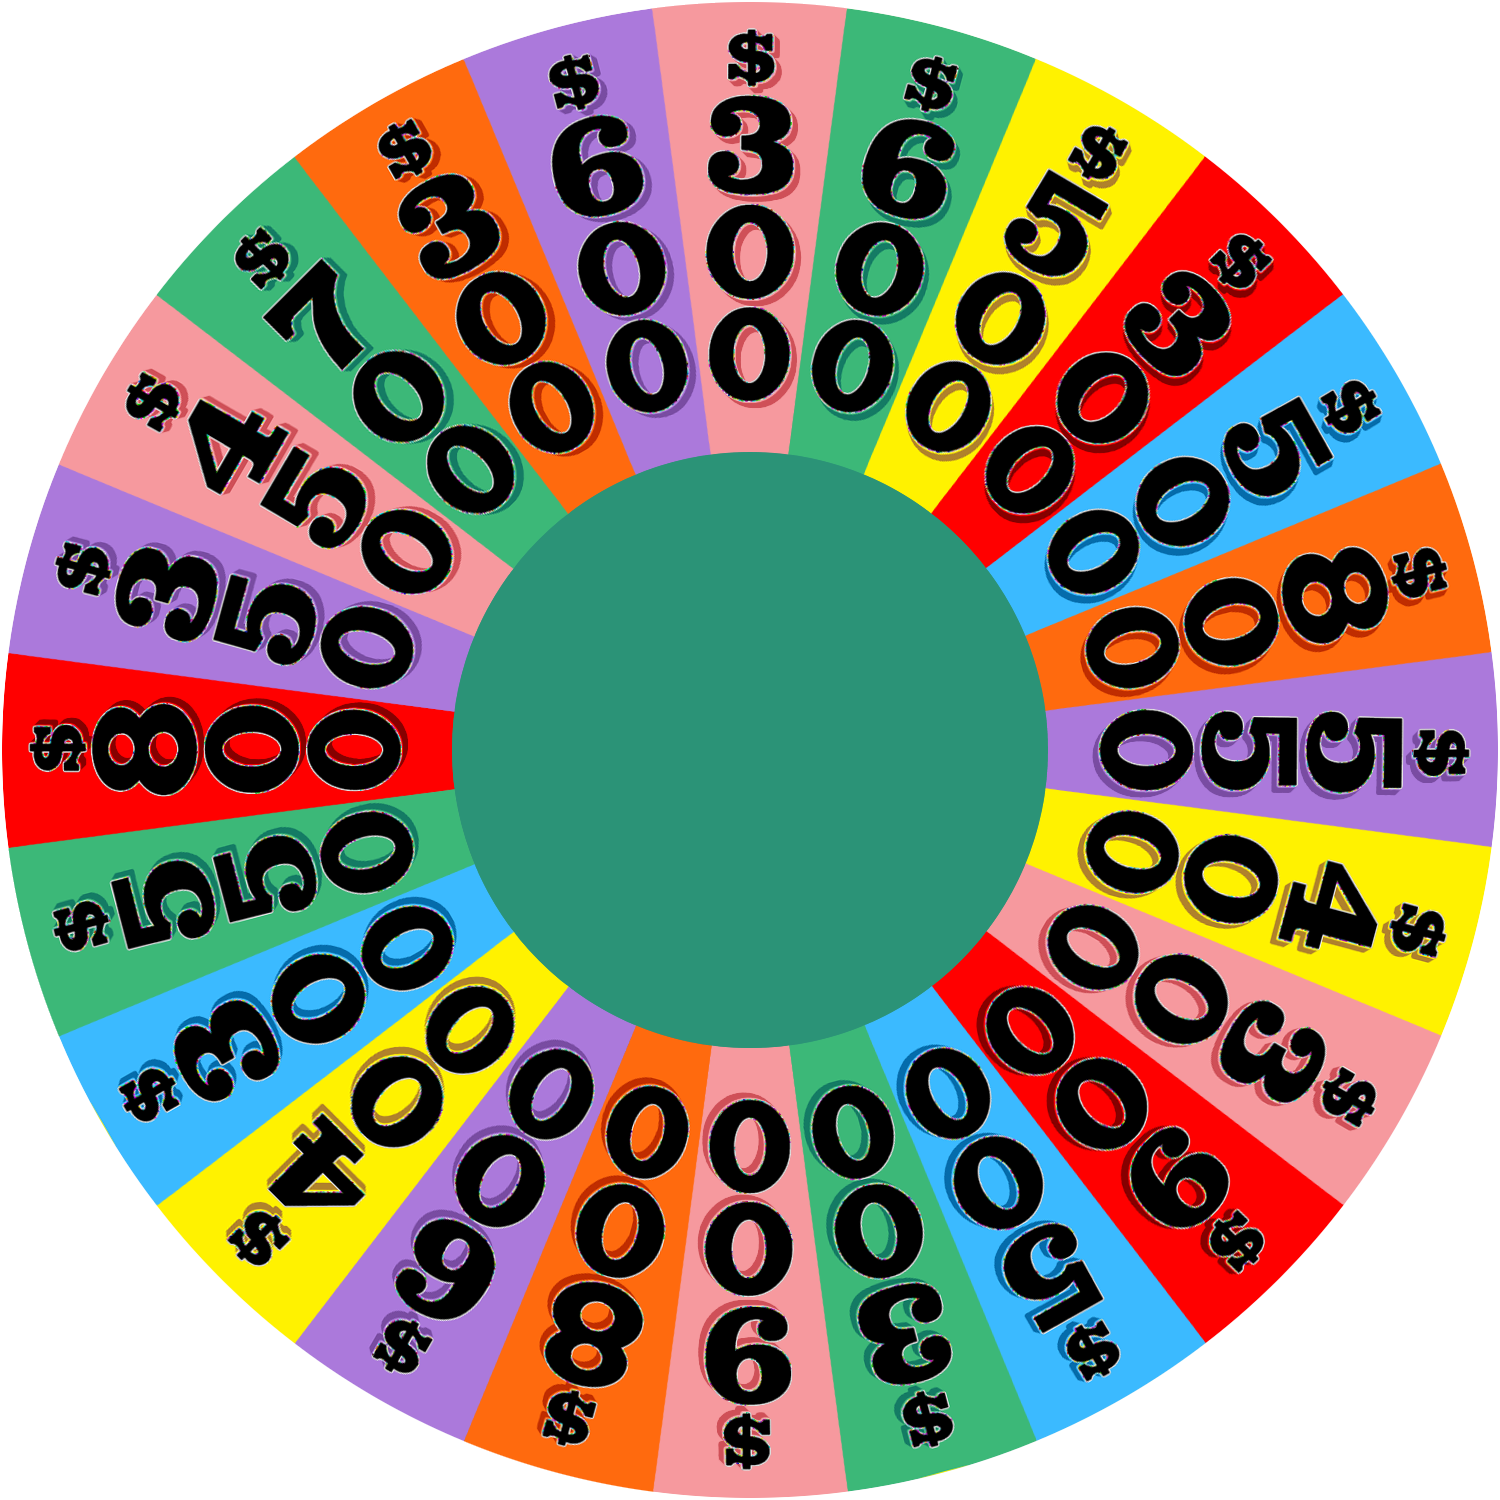 Arcade Wheel of Fortune by wheelgenius